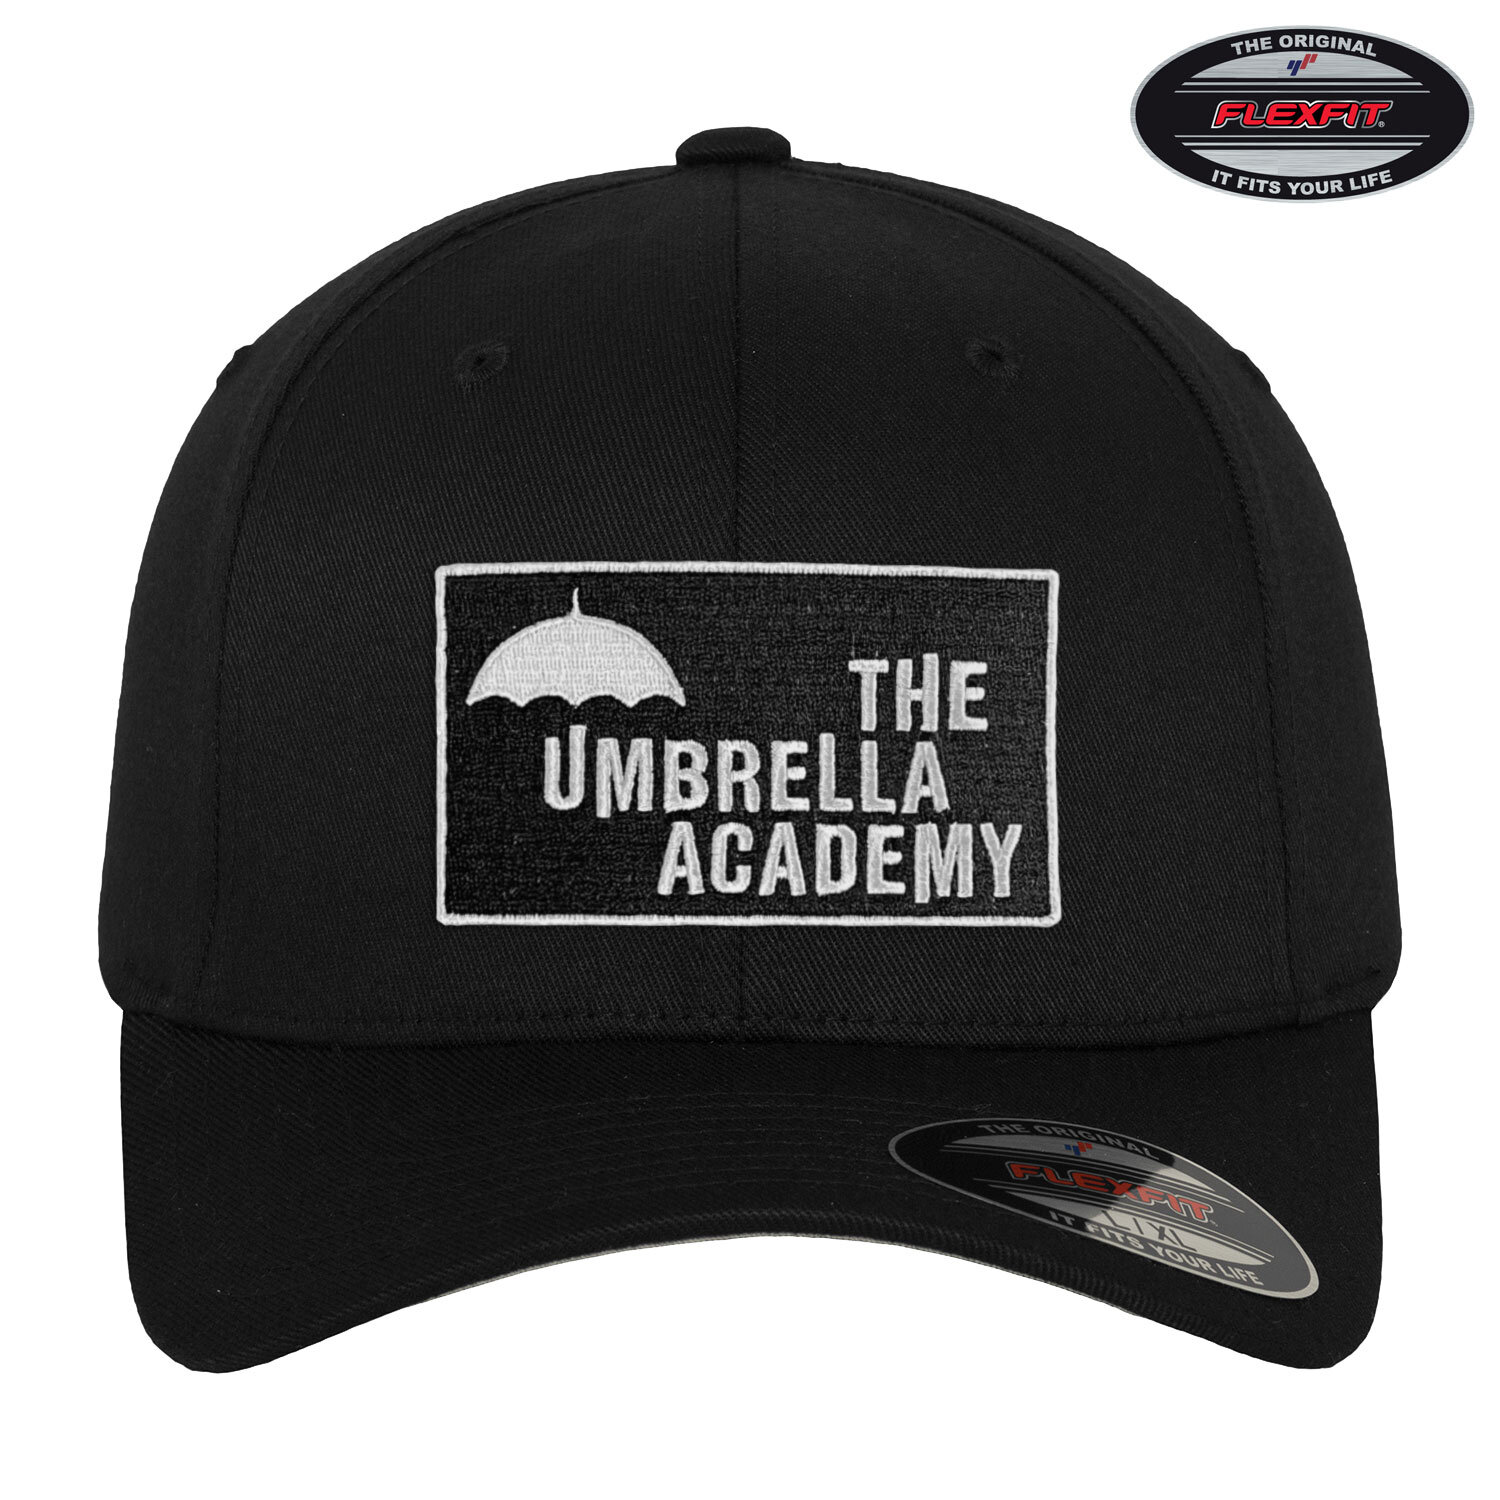 The Umbrella Academy Flexfit Cap